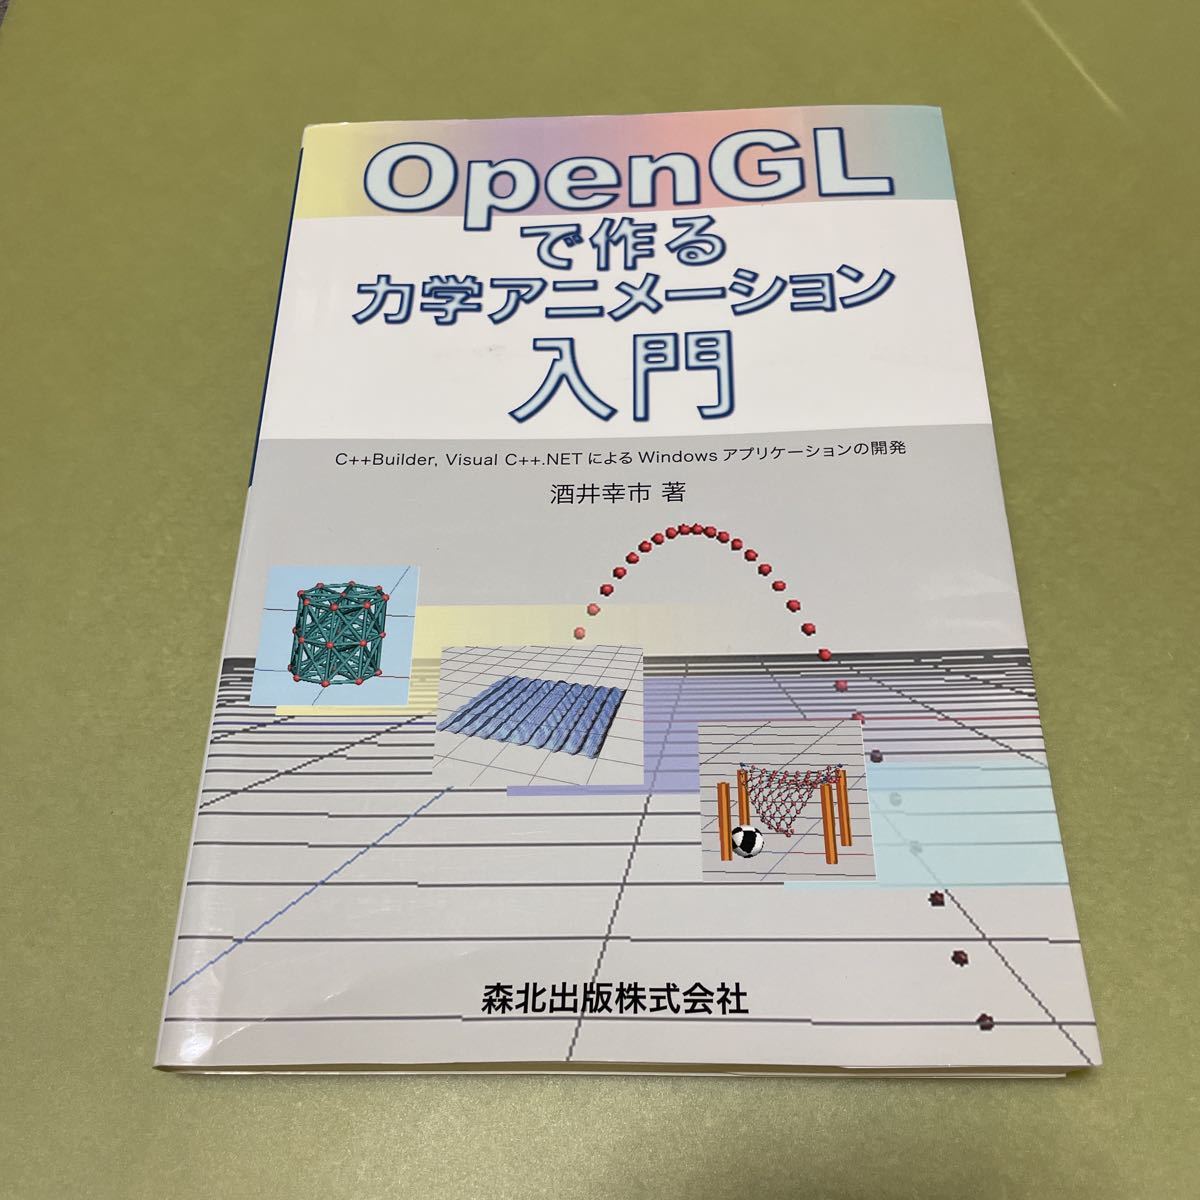 *OpenGL. work . dynamics animation introduction - C++Builder, Visual C++.NET because of Windows Application. development 